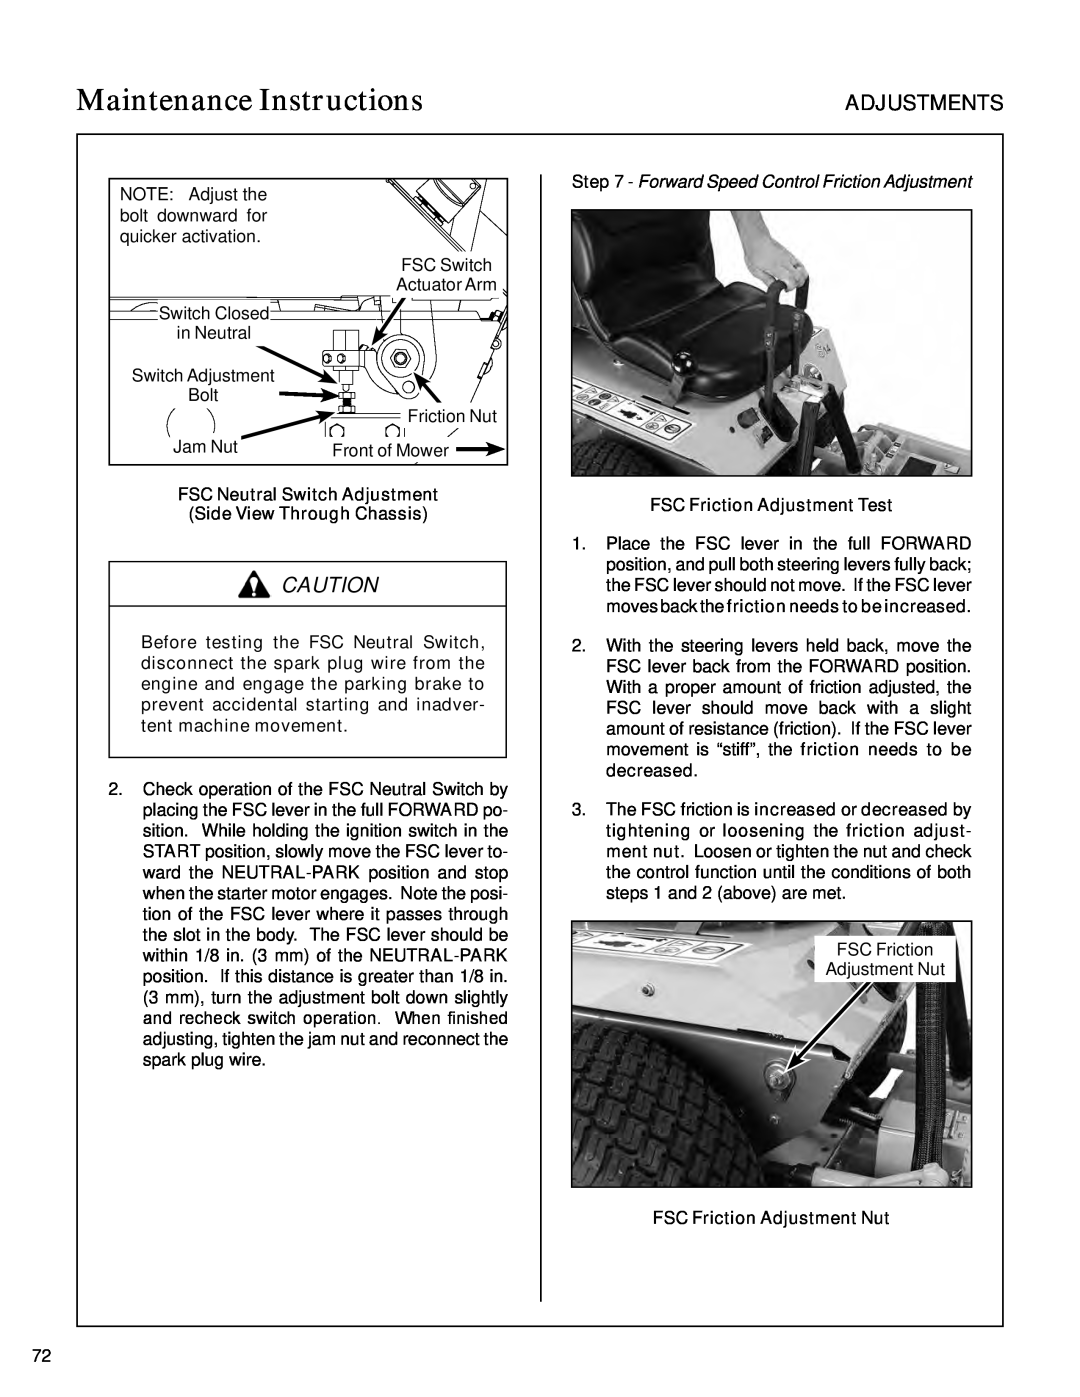 Walker S14 manual FSC Neutral Switch Adjustment, Side View Through Chassis, FSC Friction Adjustment Test, Adjustments 